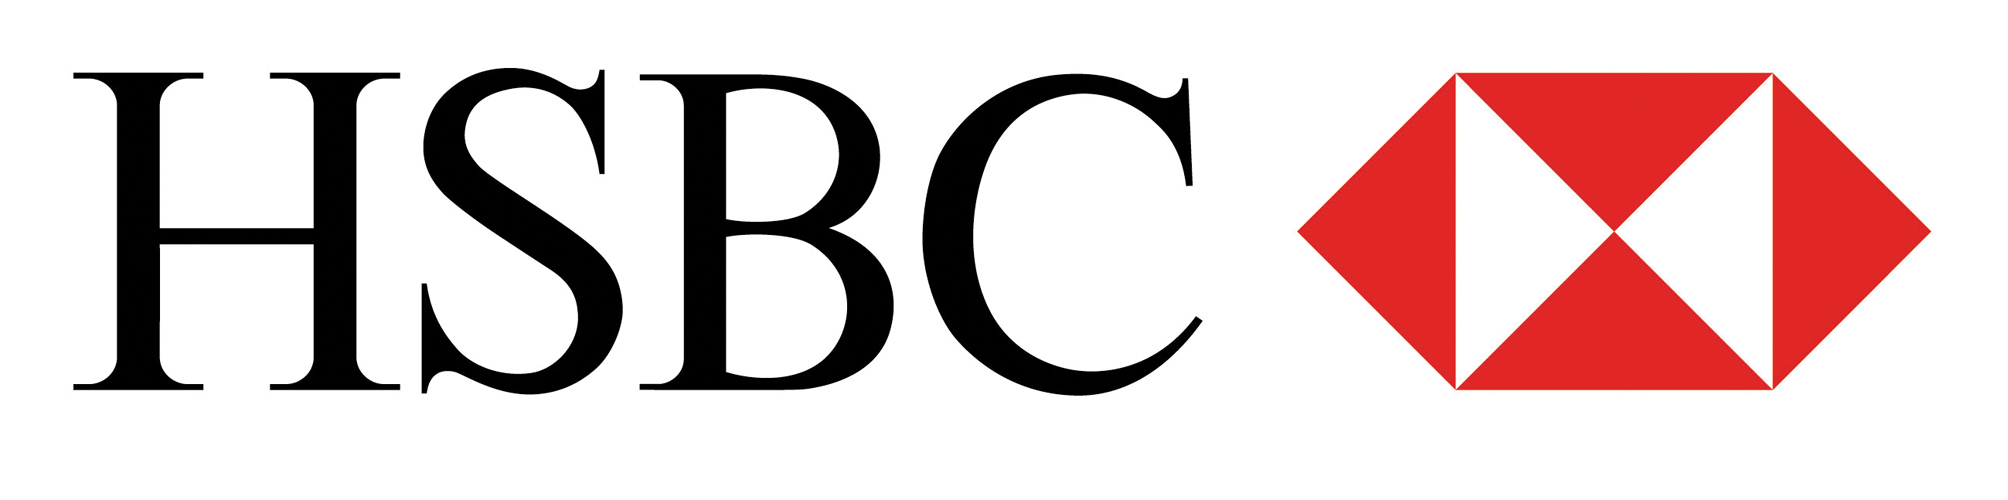 hsbc-logo1a.jpg